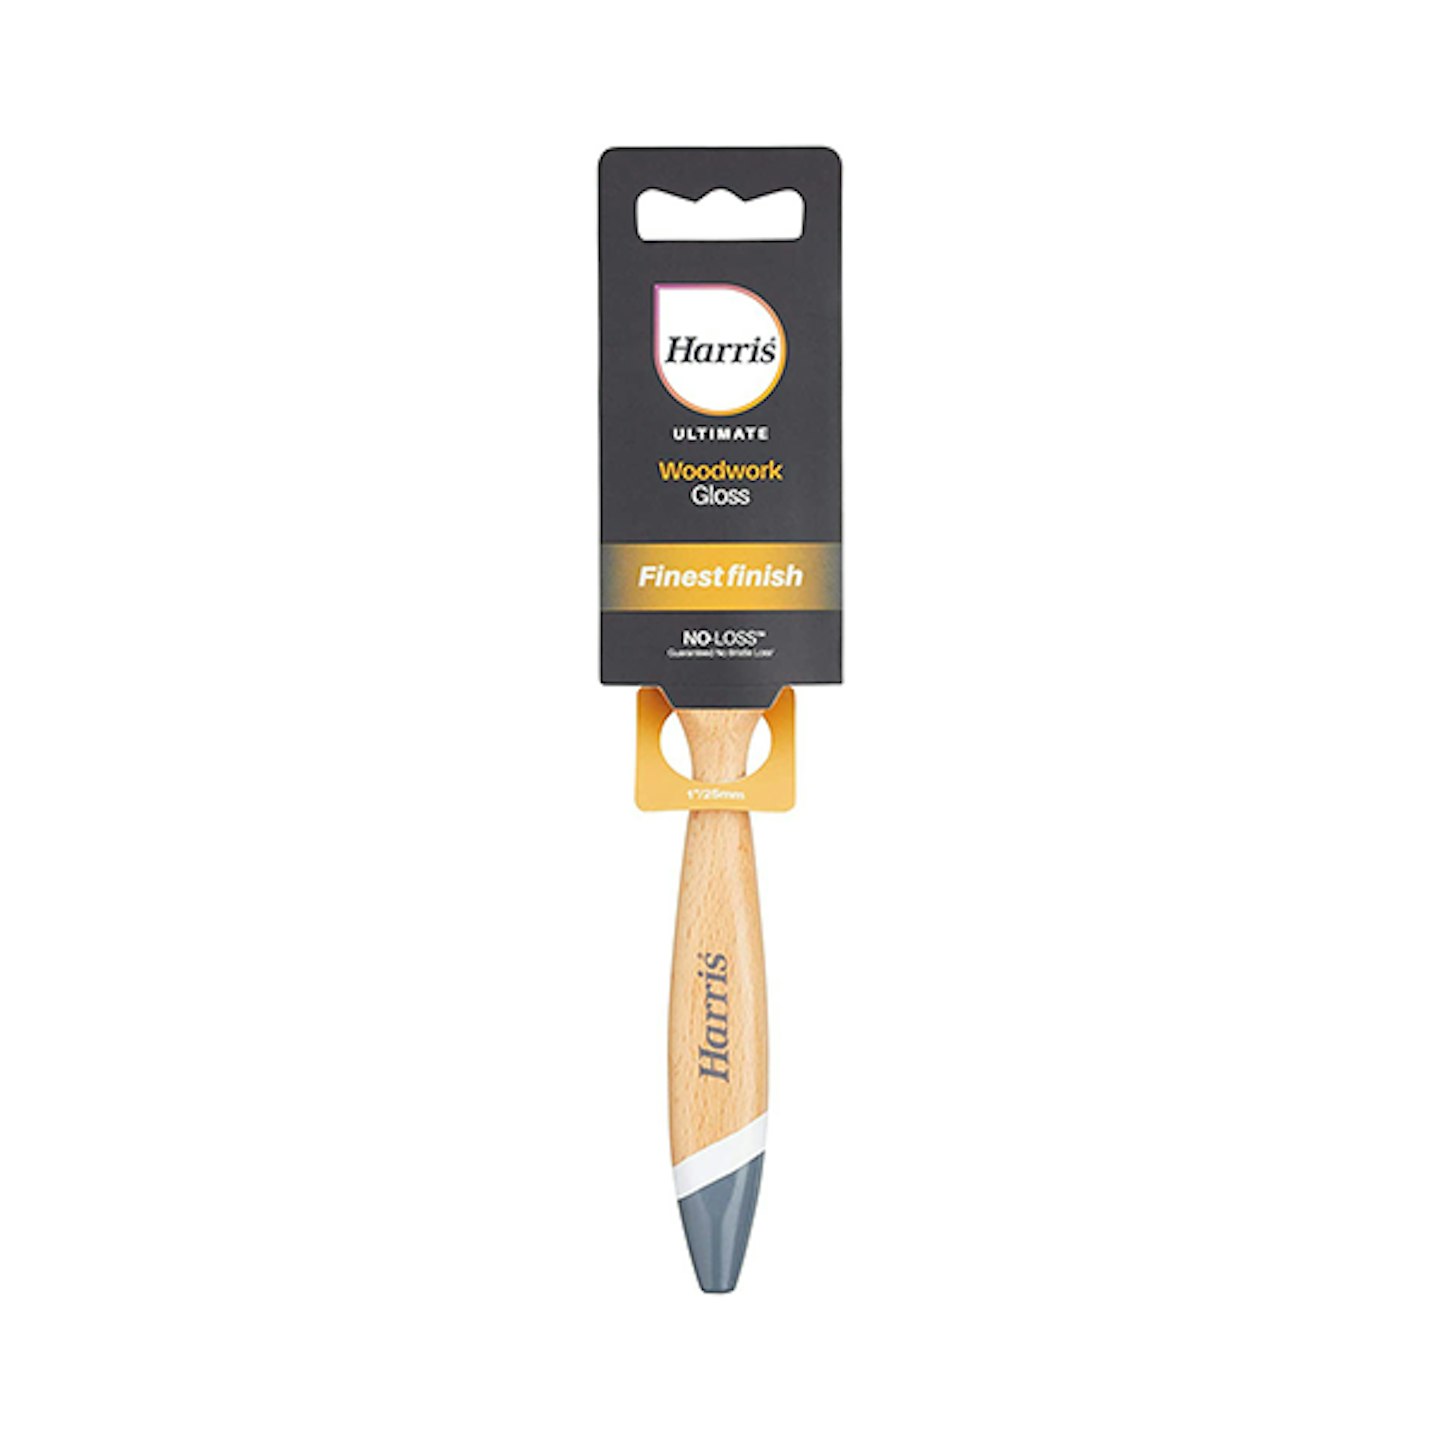  Harris Essentials Woodwork Gloss Paint Brush 5 Pack